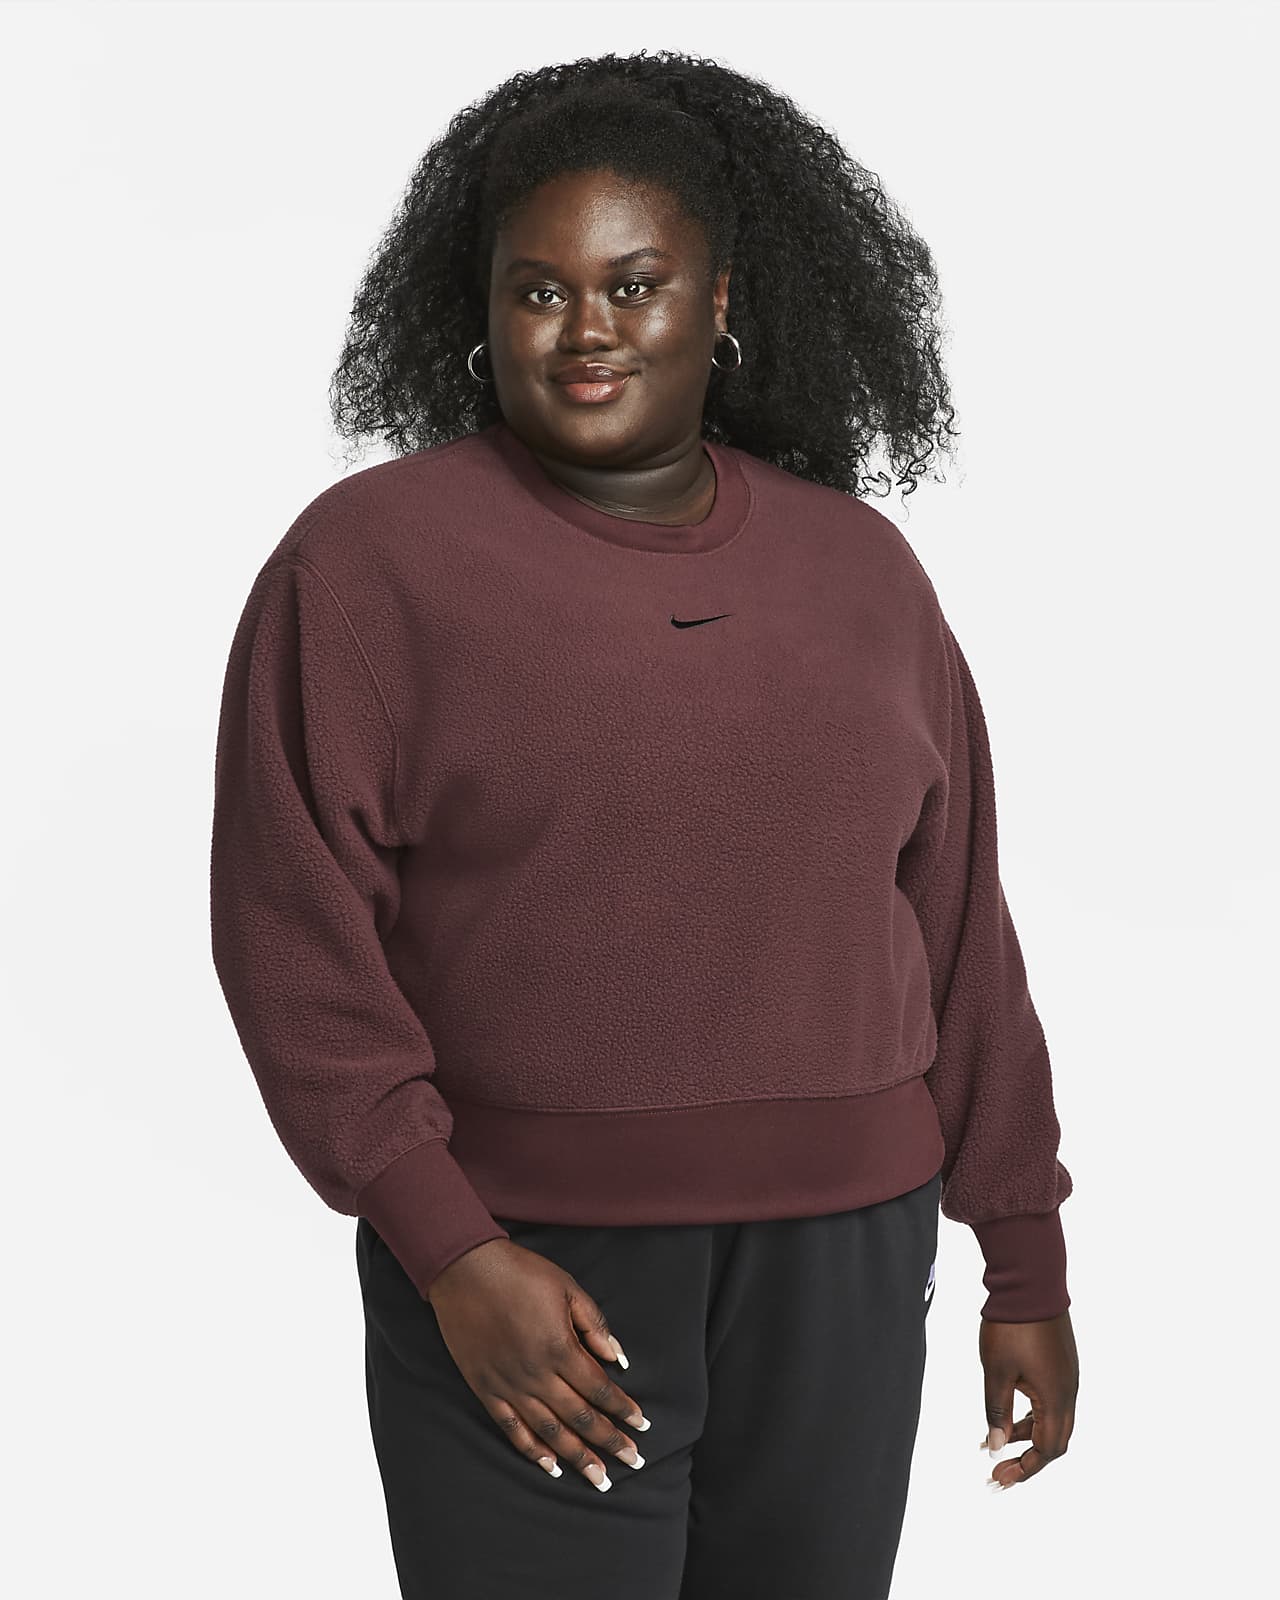 Crack pot Meer dan wat dan ook Sleutel Nike Sportswear Plush Women's Mod Crop Crew-Neck Sweatshirt (Plus Size).  Nike.com